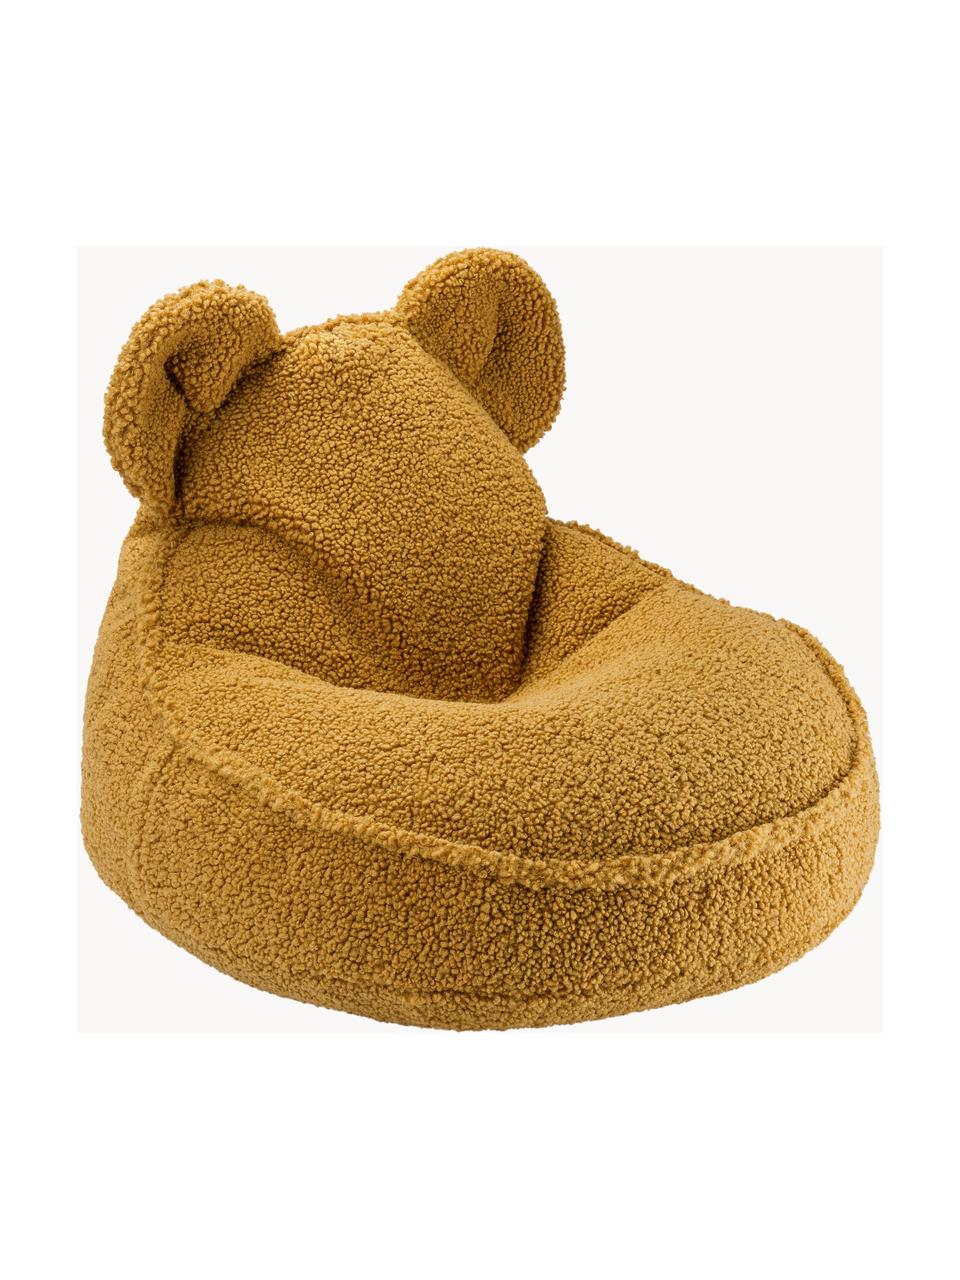 Kinder-Sitzsack Bear aus Teddy, Teddy Senfgelb, B 60 x T 70 cm